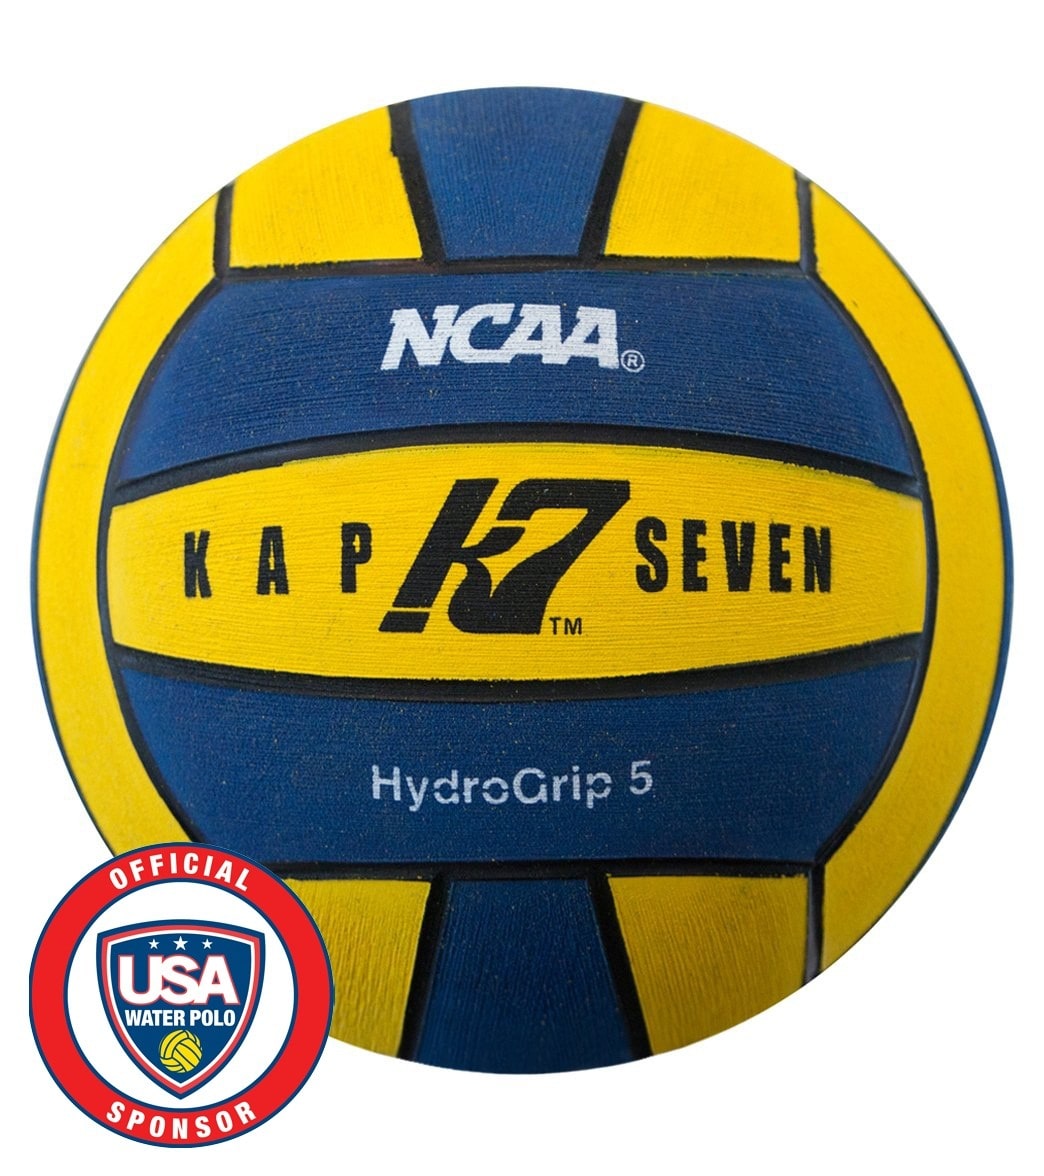 Kap7 Men's Size 5 Hydrogrip Water Polo Ball Ncaa Cwpa - Yellow/Navy - Swimoutlet.com